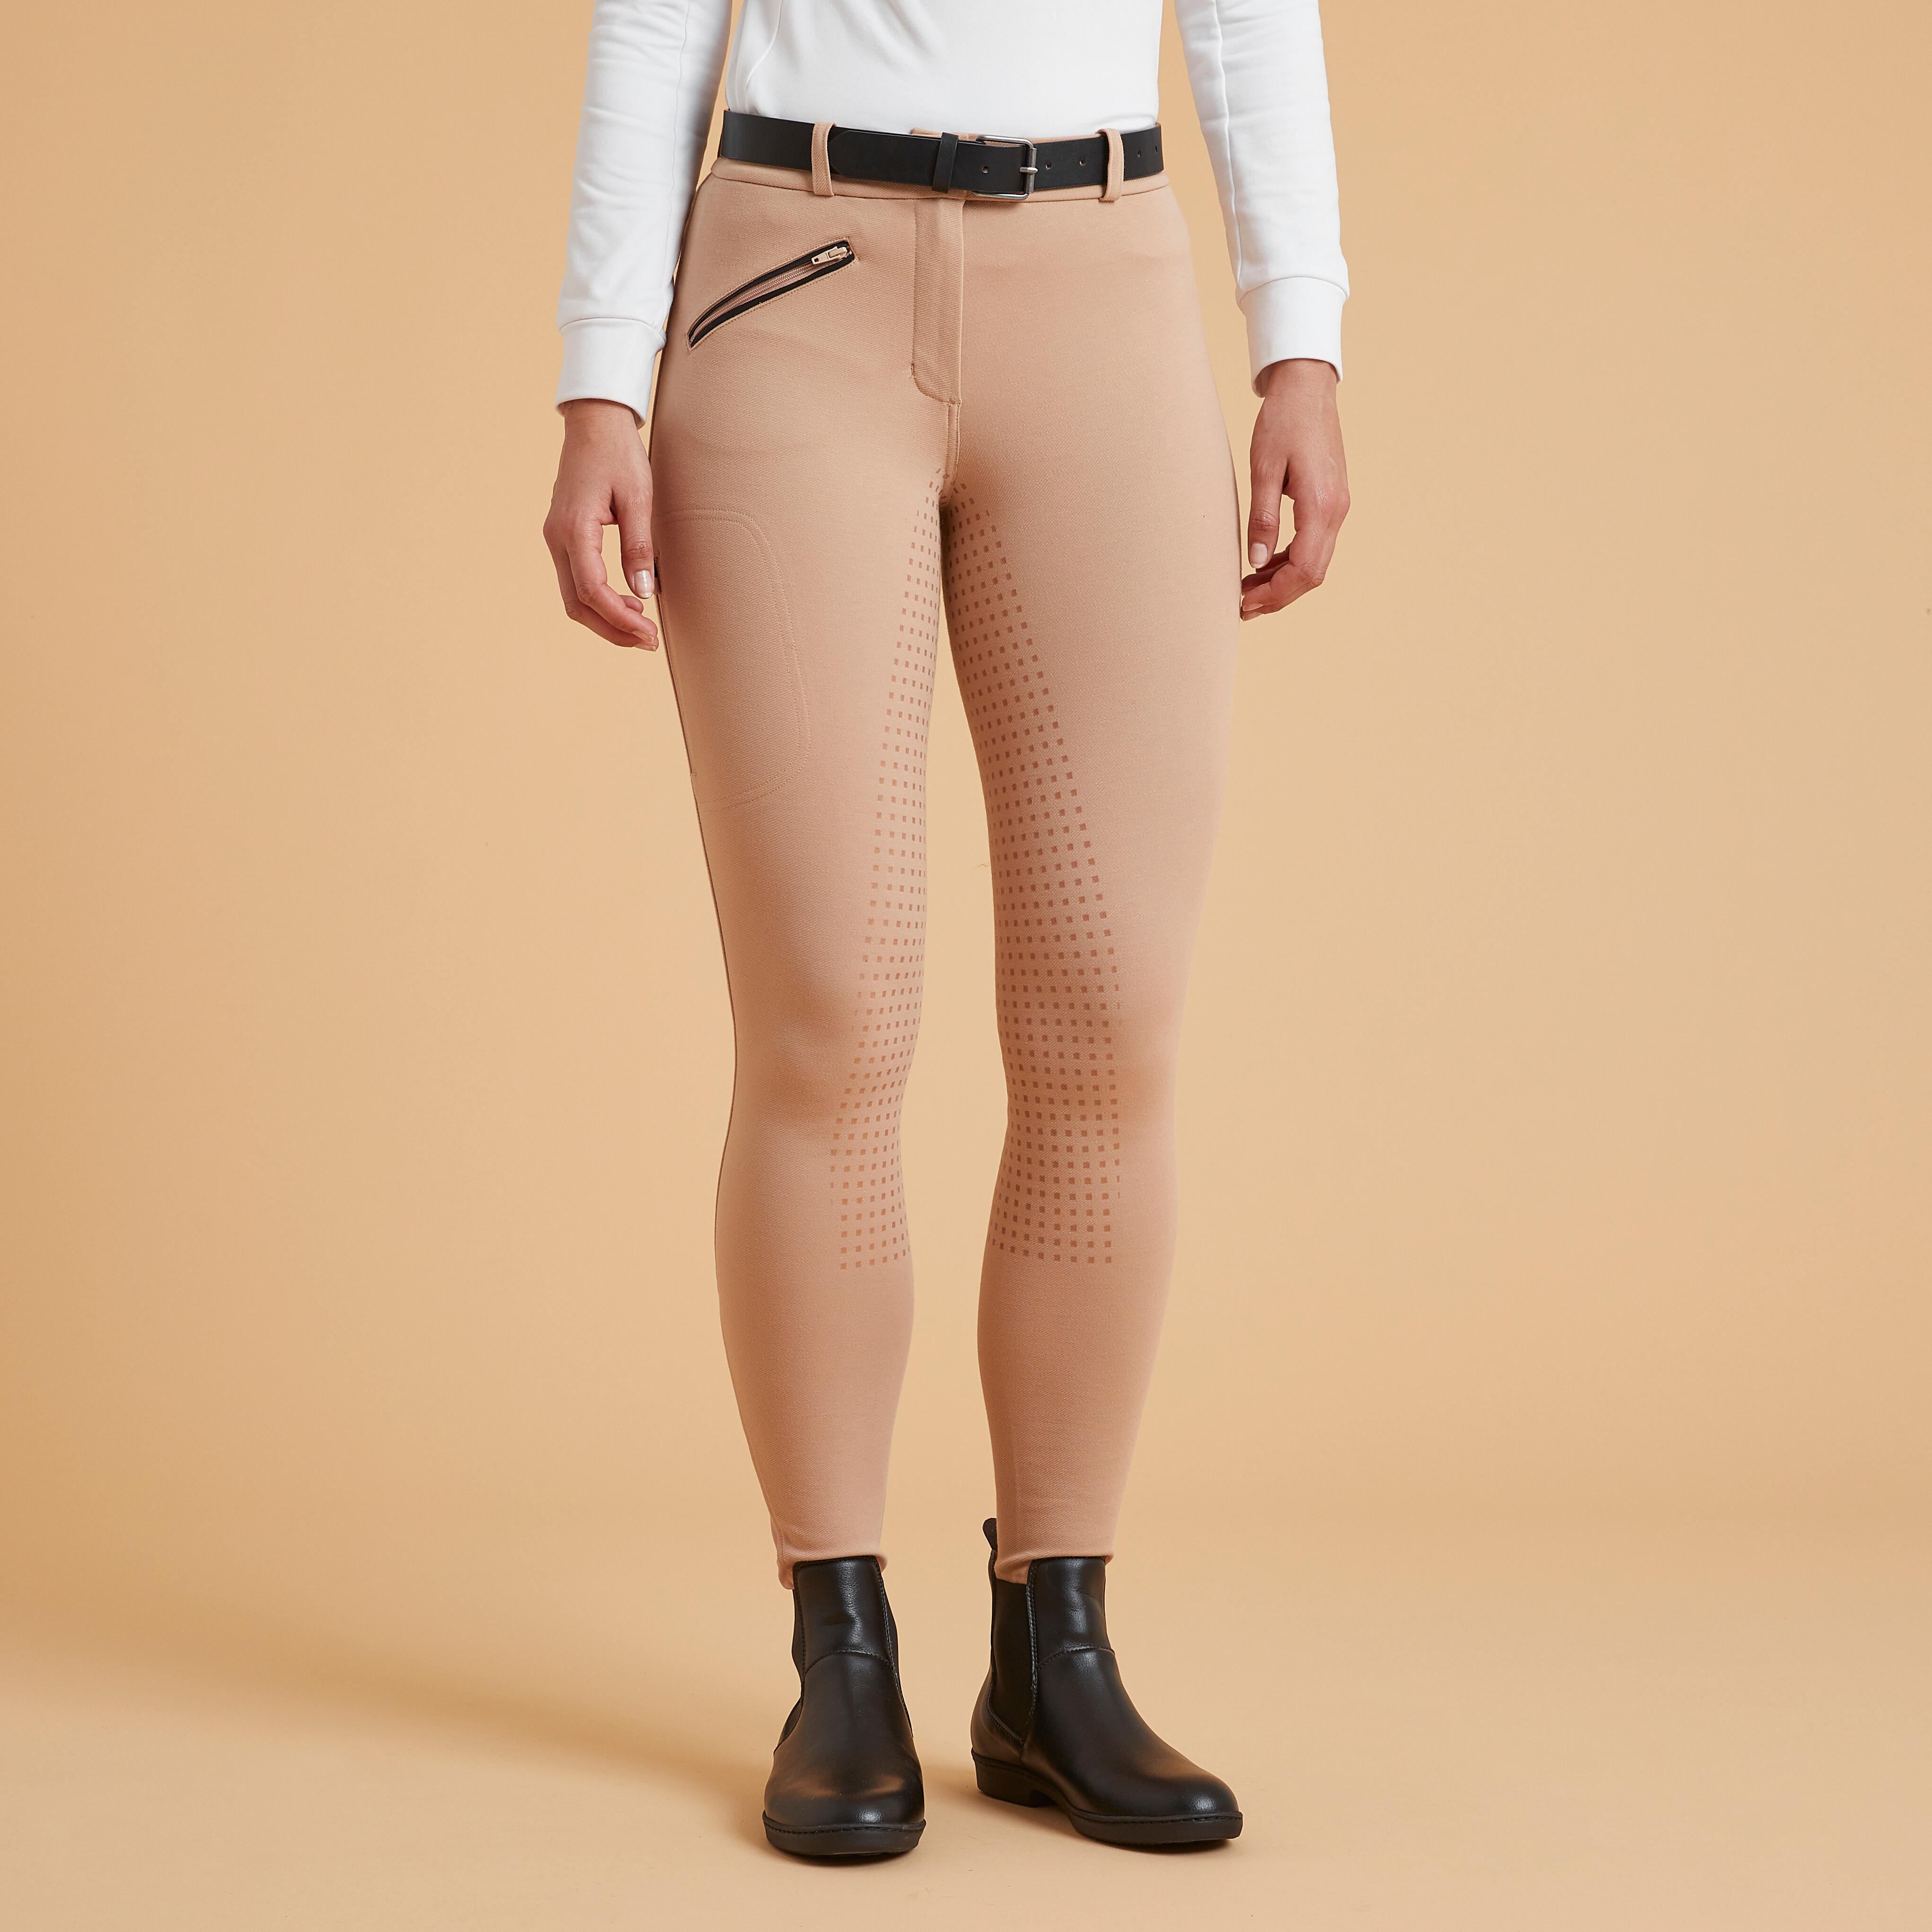 pantalon équitation full grip chaud femme - 500 beige - fouganza